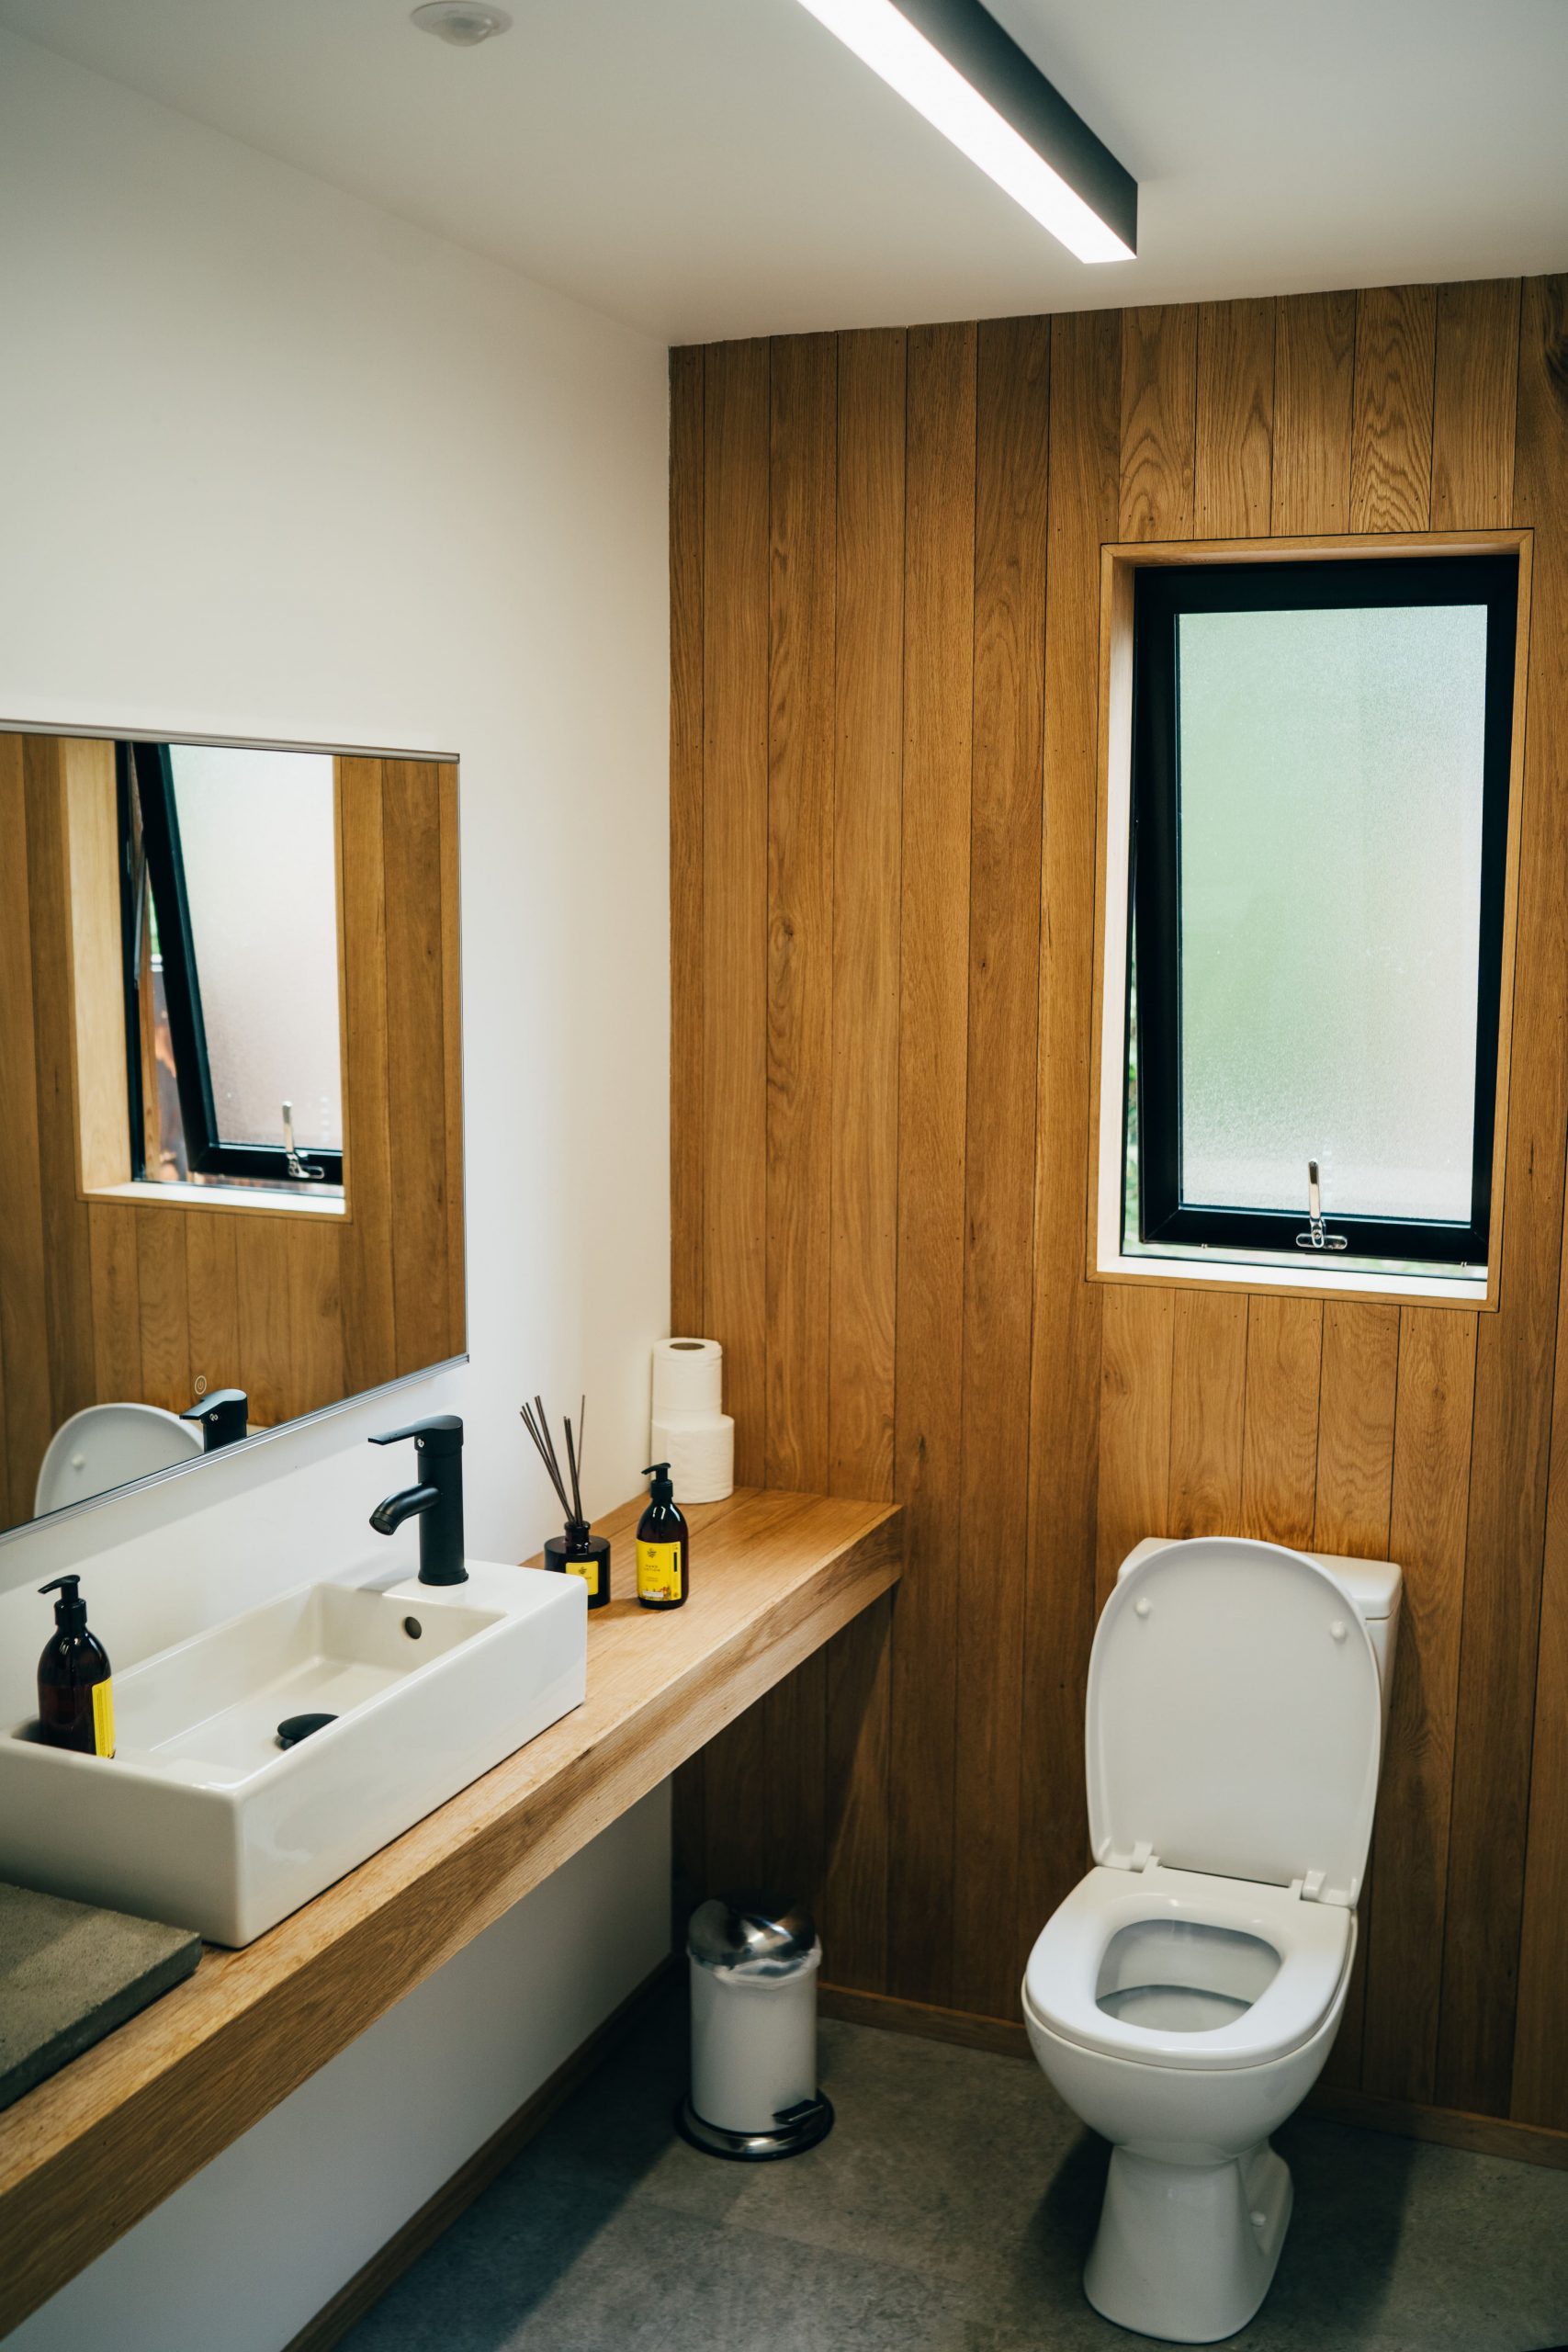 Smartbuild Modular Log Cabin Bathroom off site build modular office wood